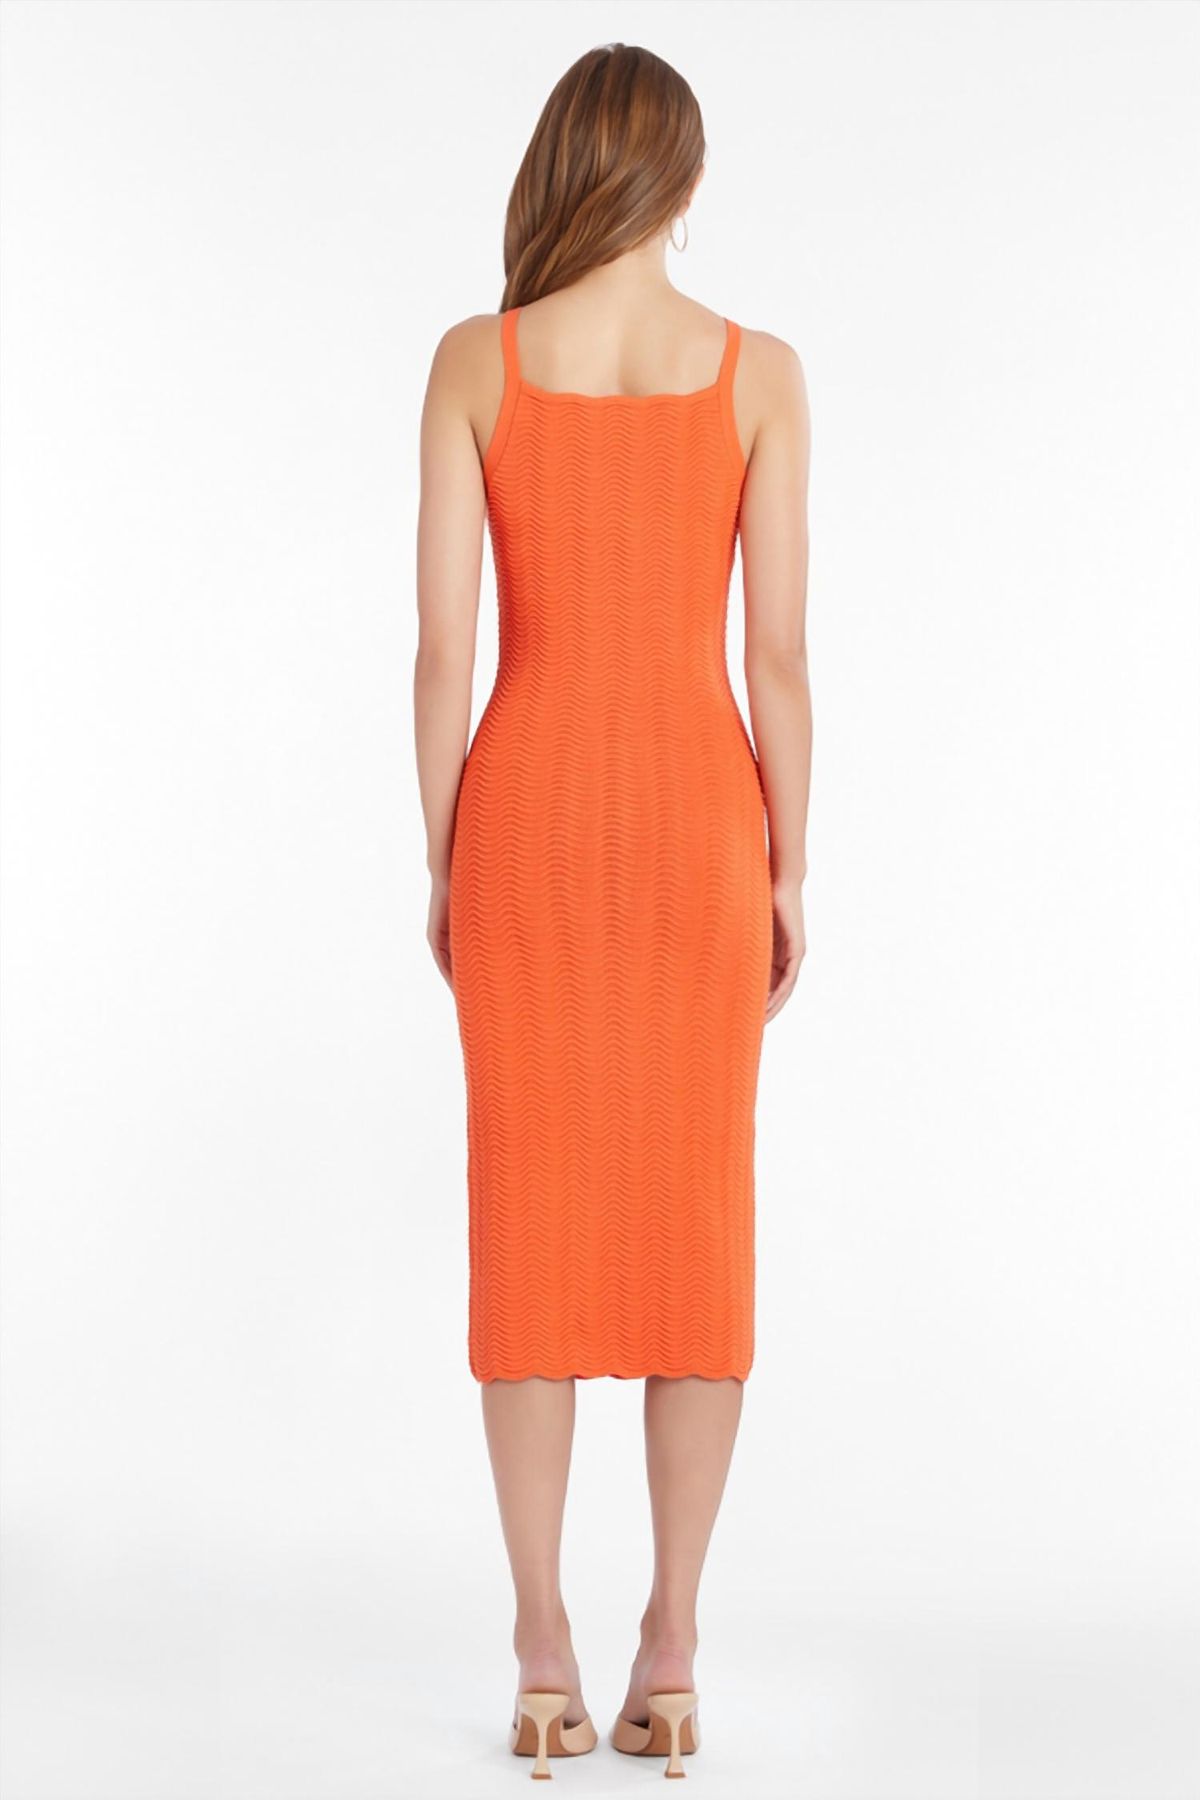 Style 1-2292363468-70 Amanda Uprichard Size XS Orange Cocktail Dress on Queenly